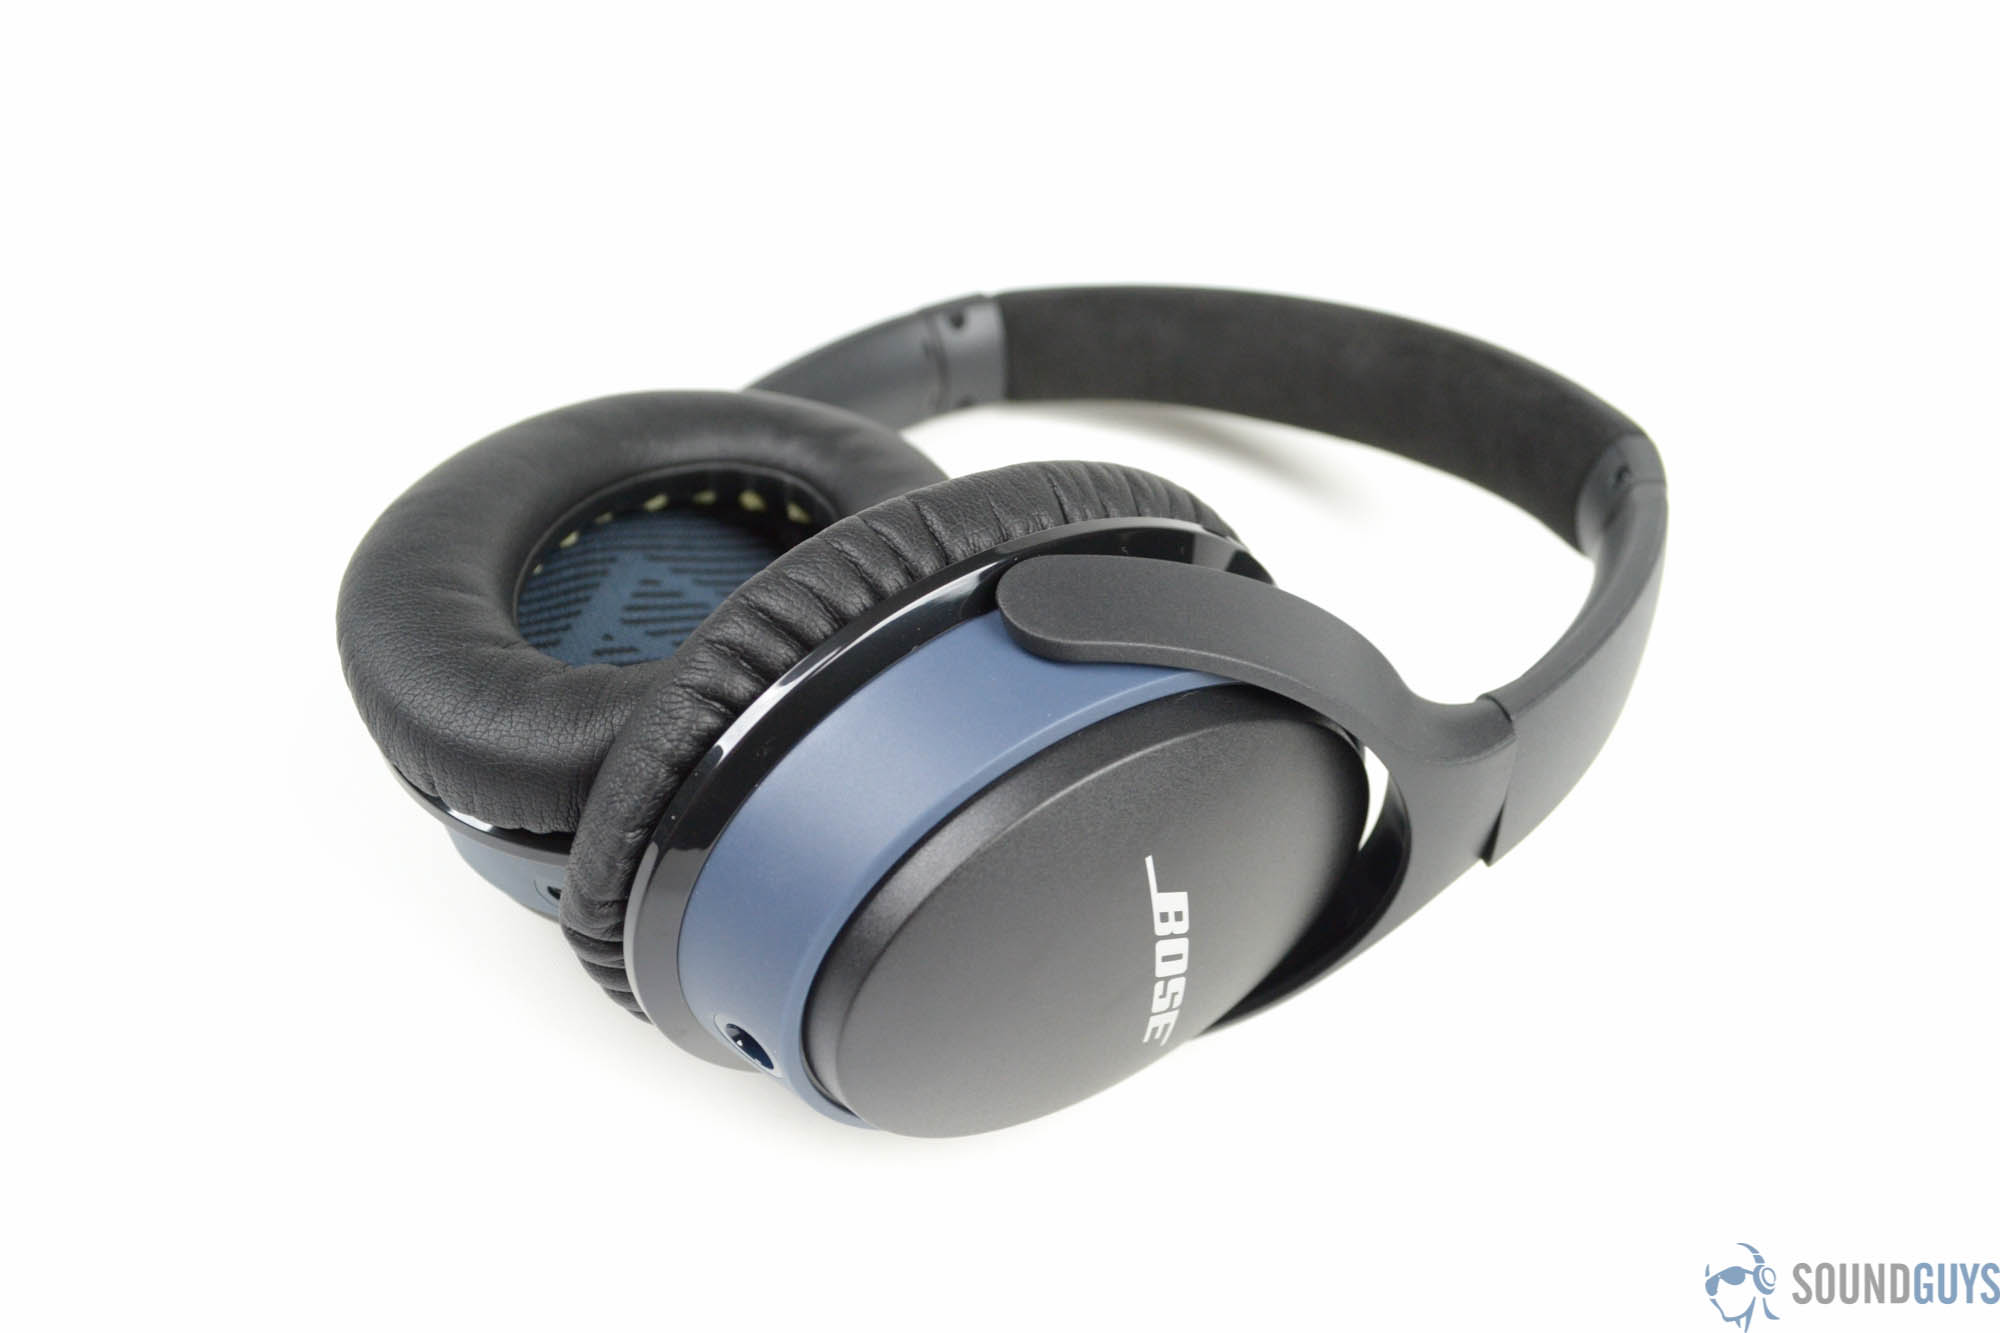 Bose SoundLink Around-Ear Wireless Headphone Review